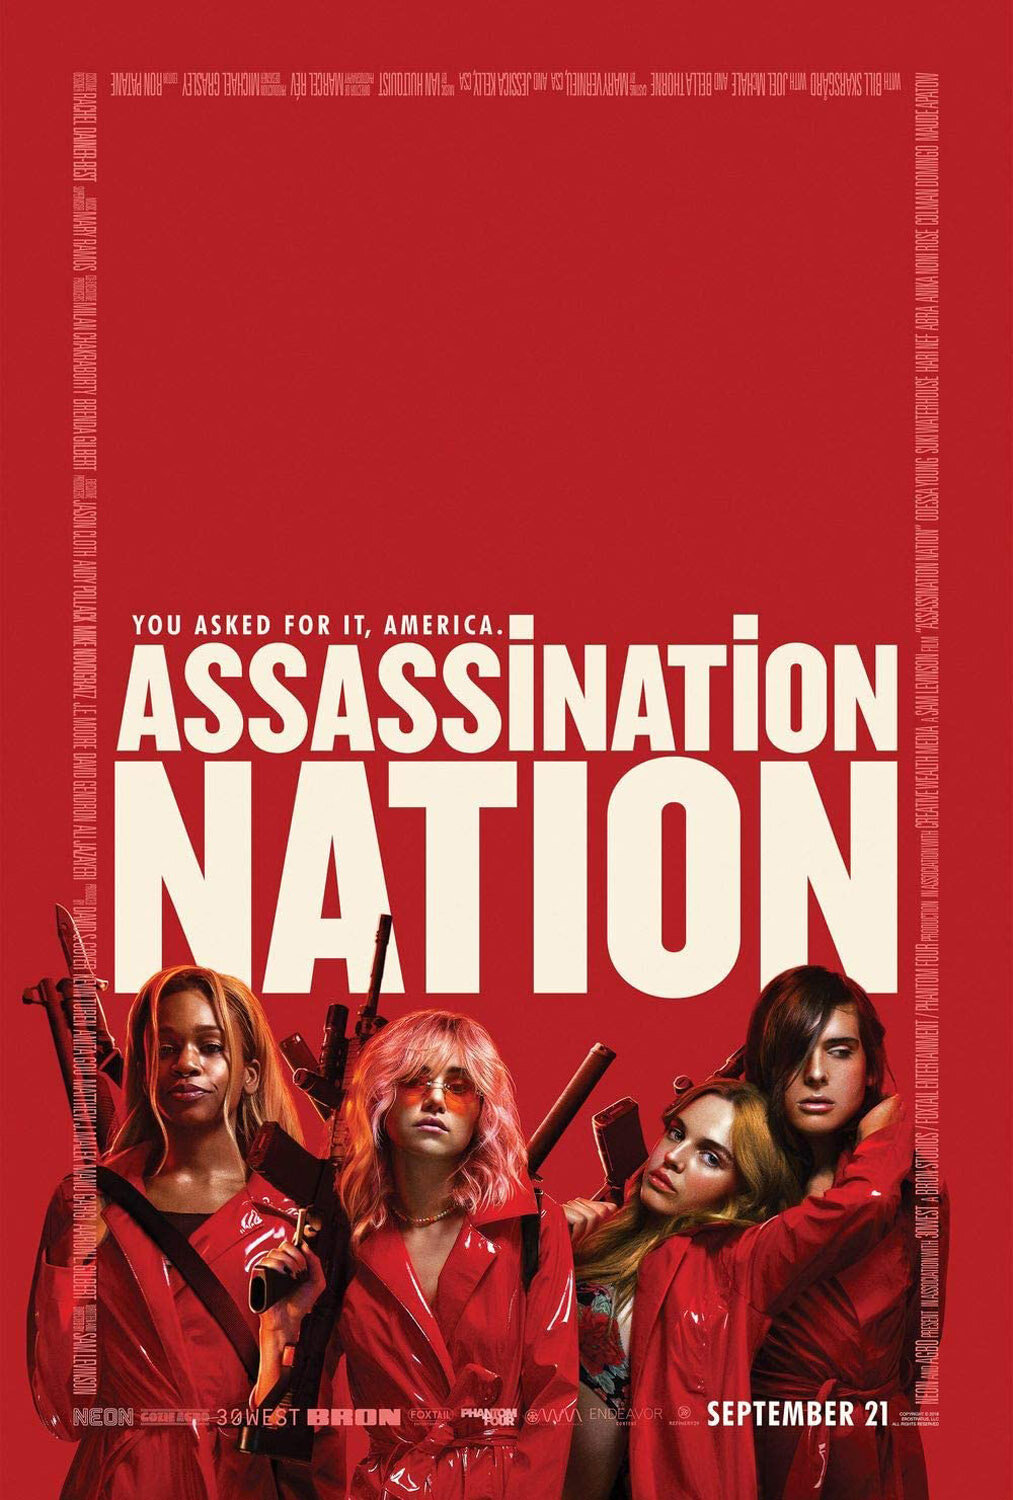 Assassination-nation-by-Sam-Levinson-Monica-Lek-13.jpg